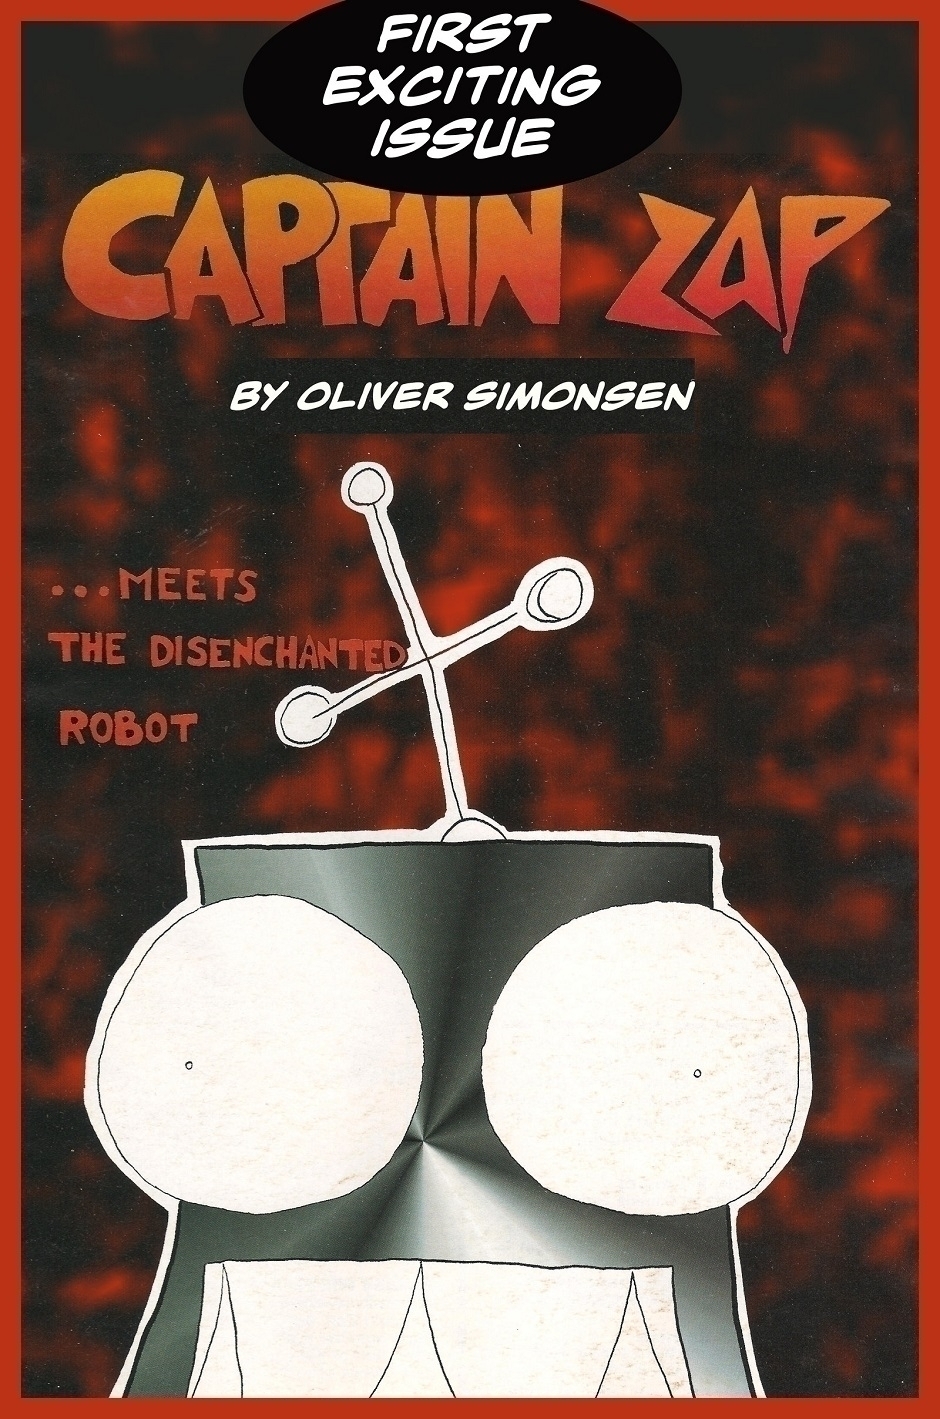 "Captain Zap meets the disenchanted robot" cover